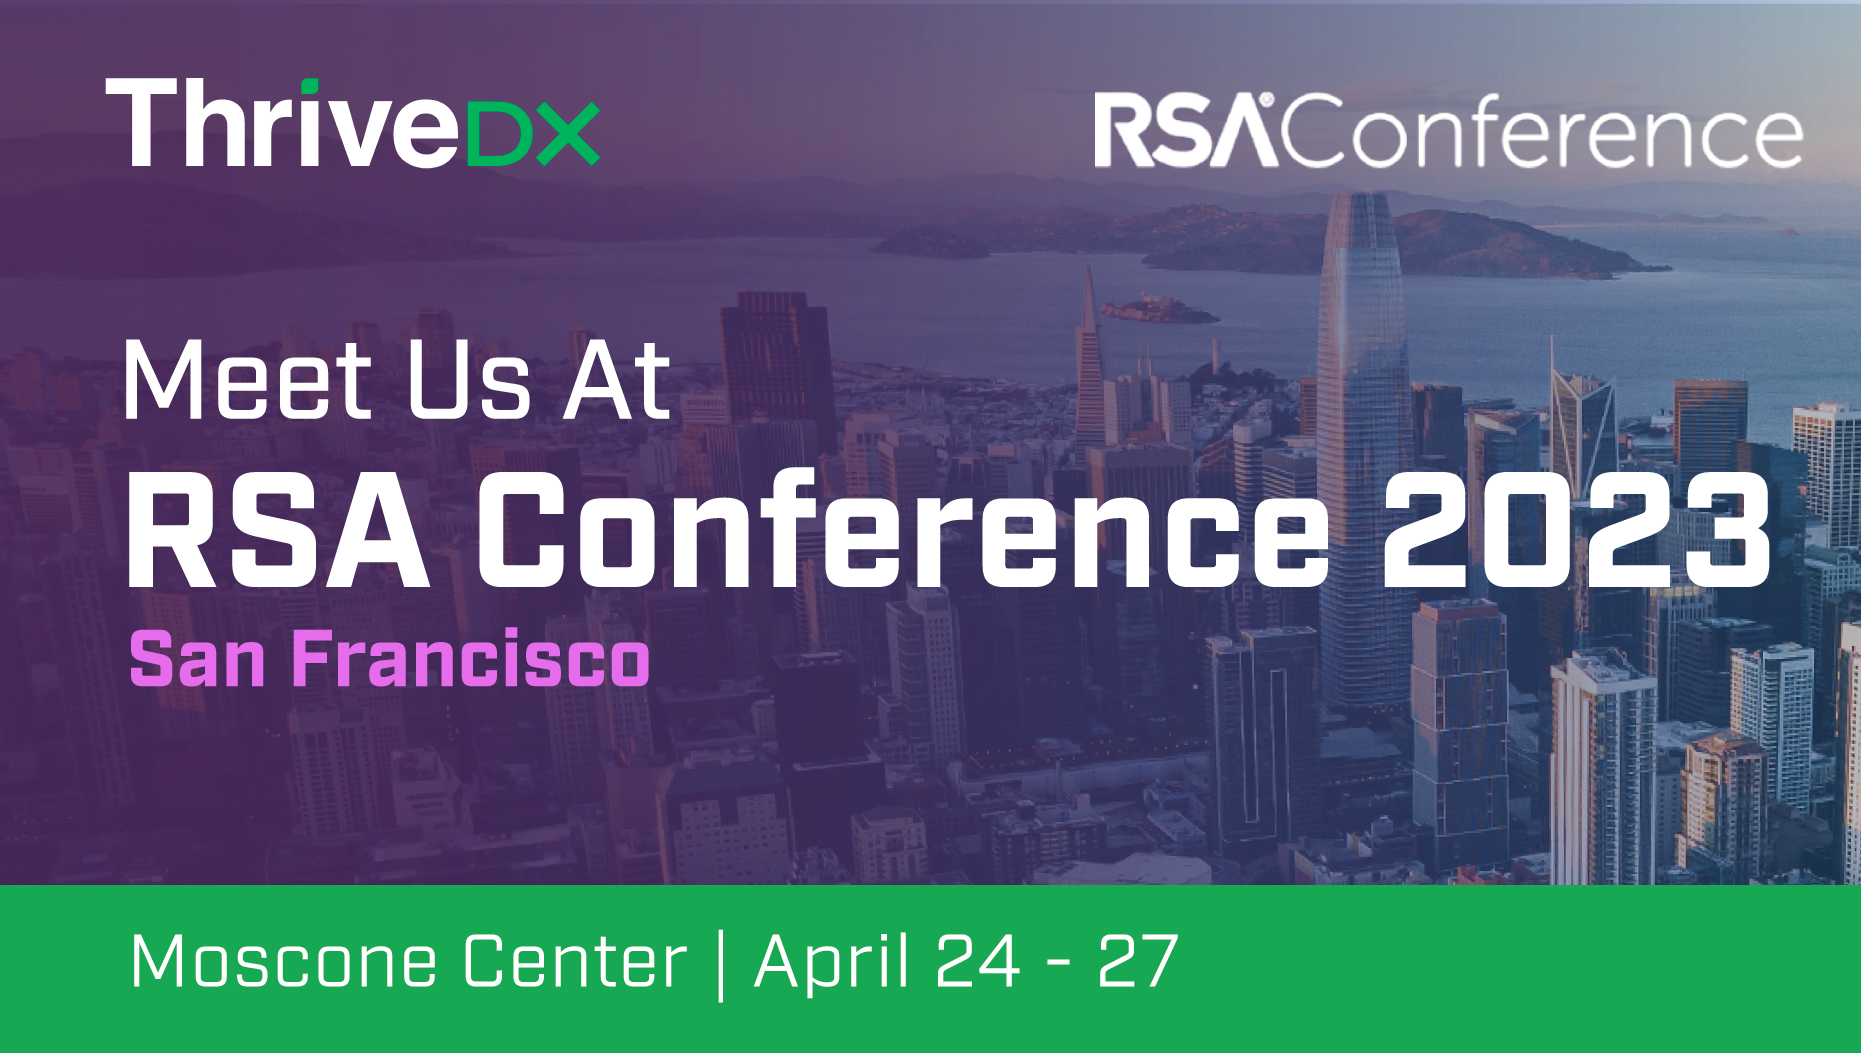 RSA Conference 2023 ThriveDX